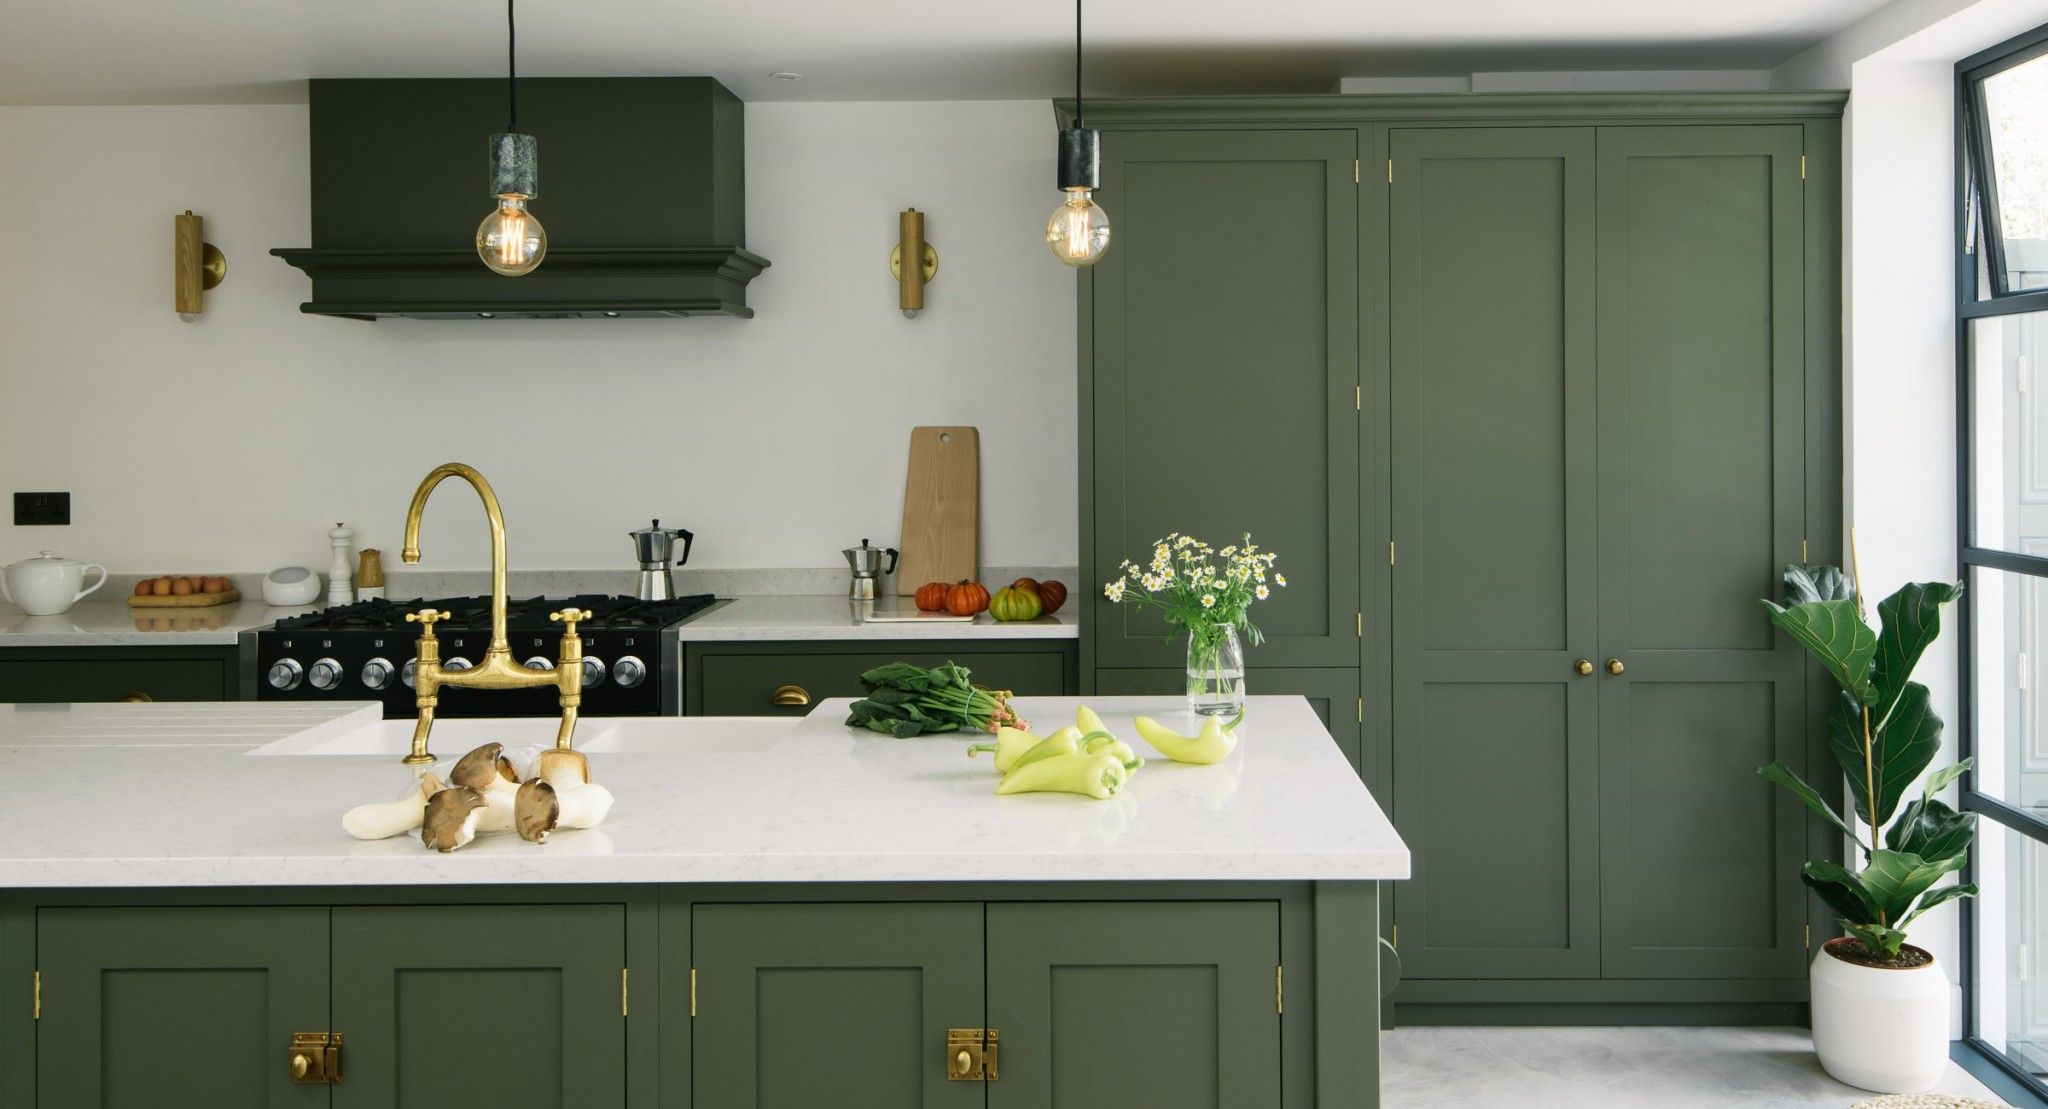 Is a green kitchen a good idea?